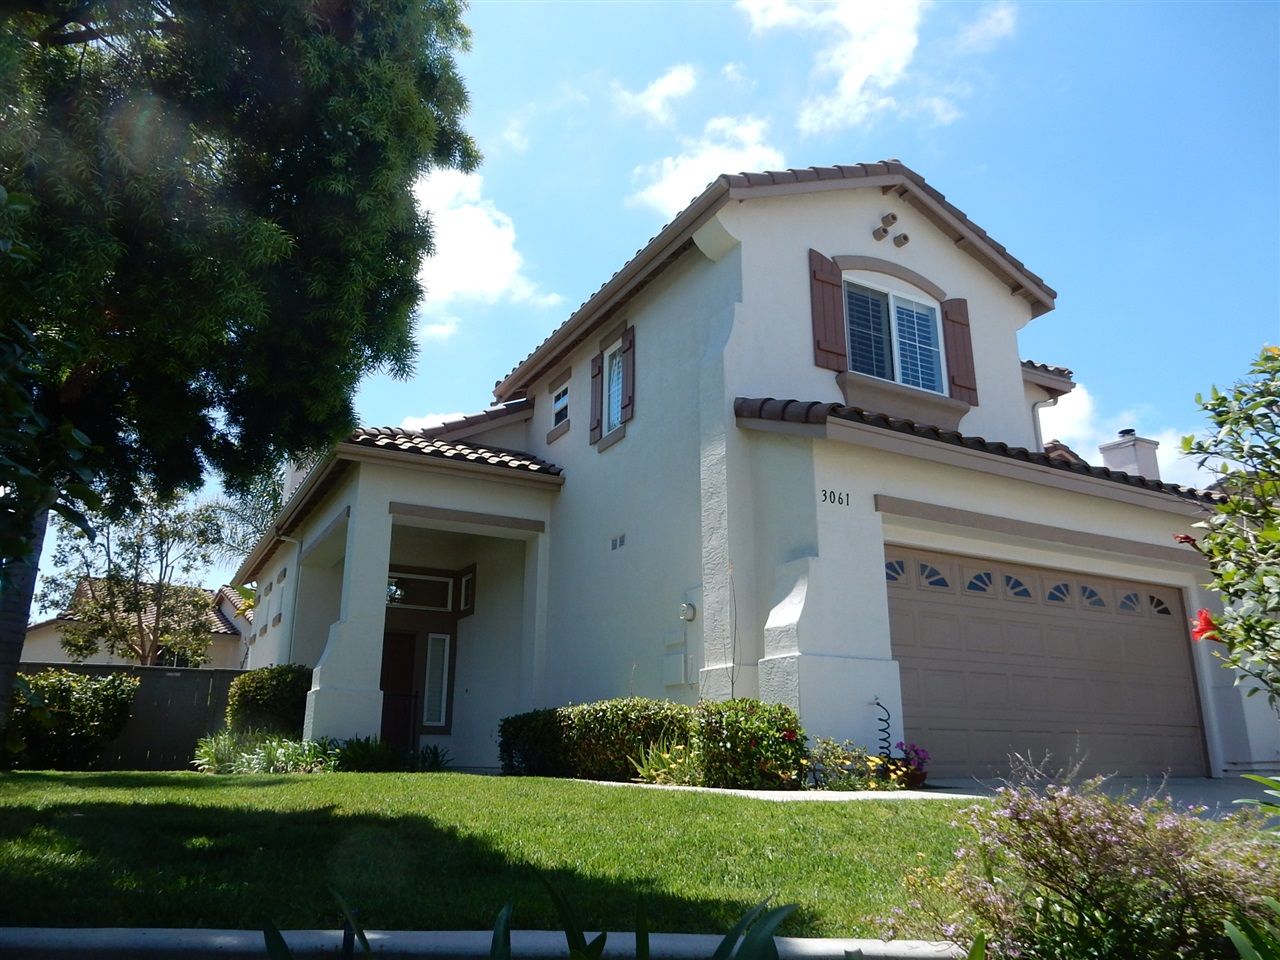 Main Photo: CARLSBAD EAST Twin-home for sale : 3 bedrooms : 3061 Rancho La Presa in Carlsbad